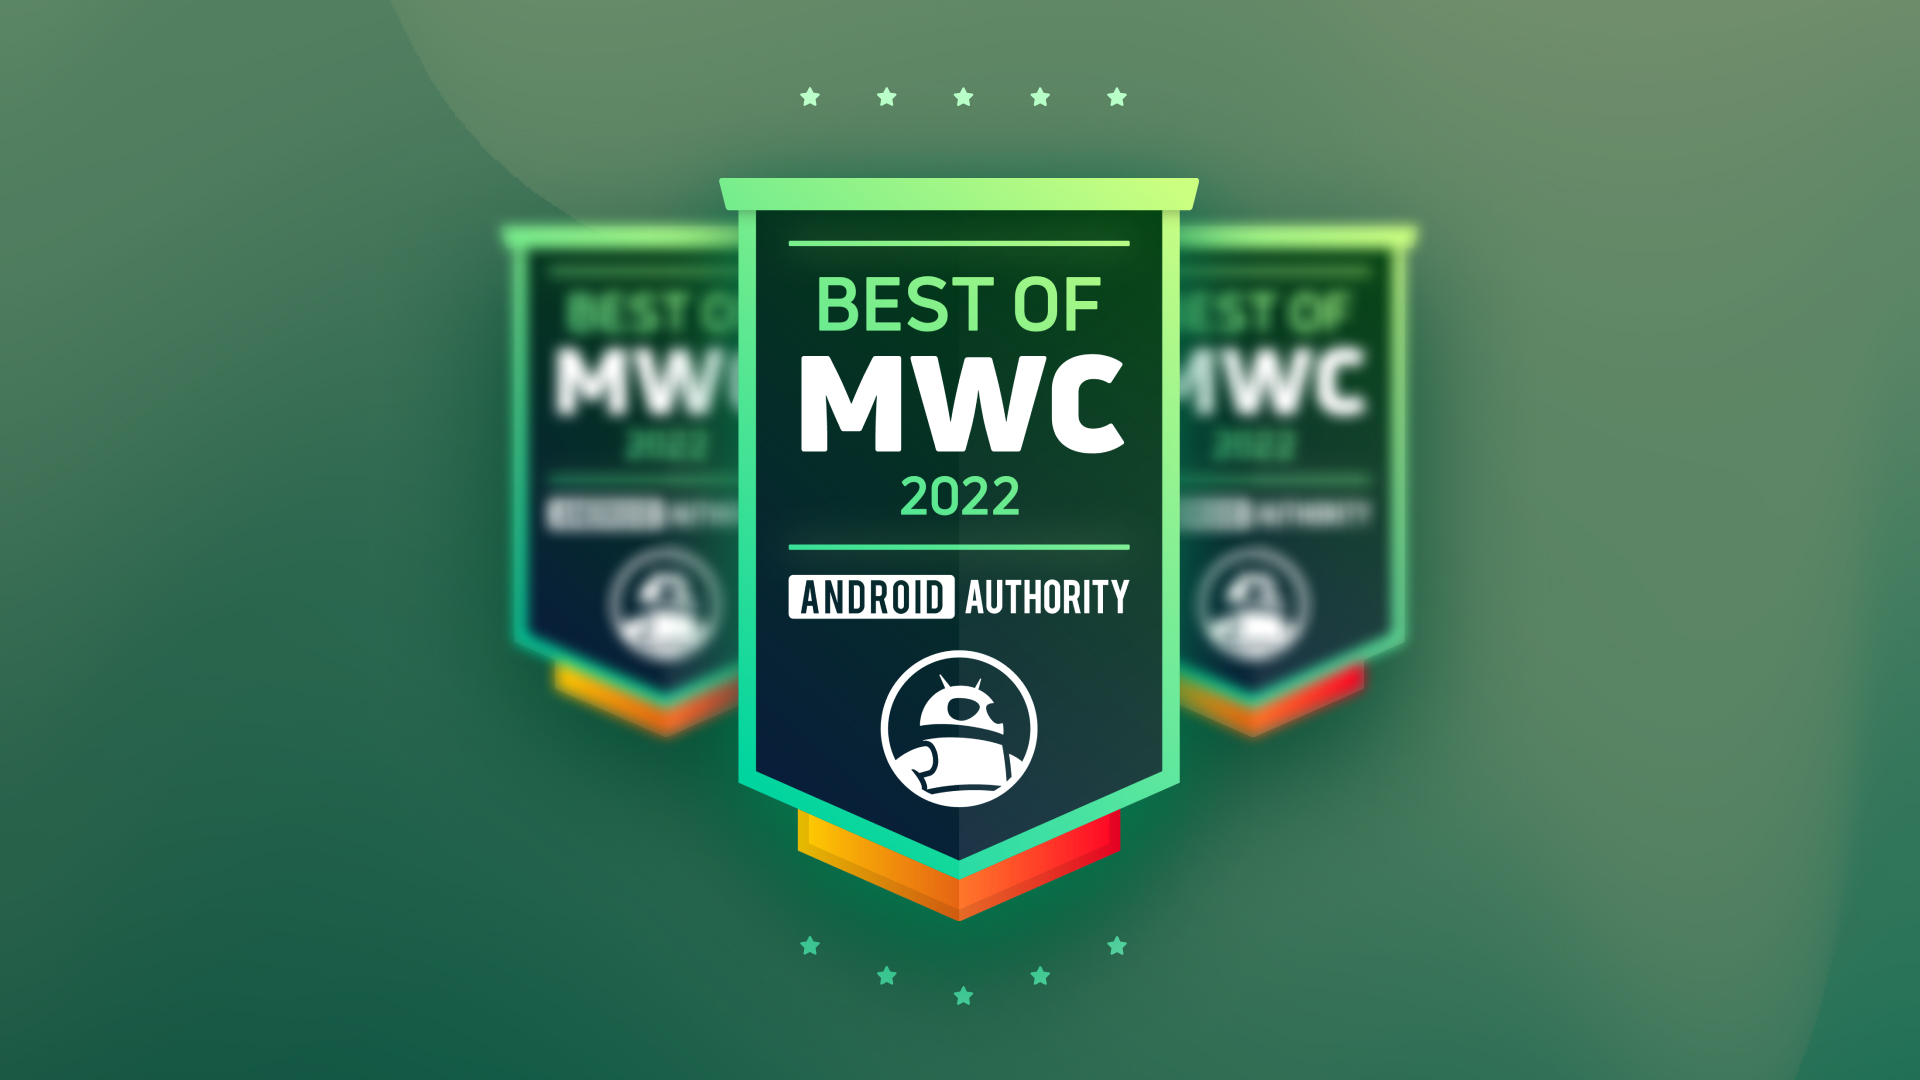 最佳MWC 2022 Awards标题